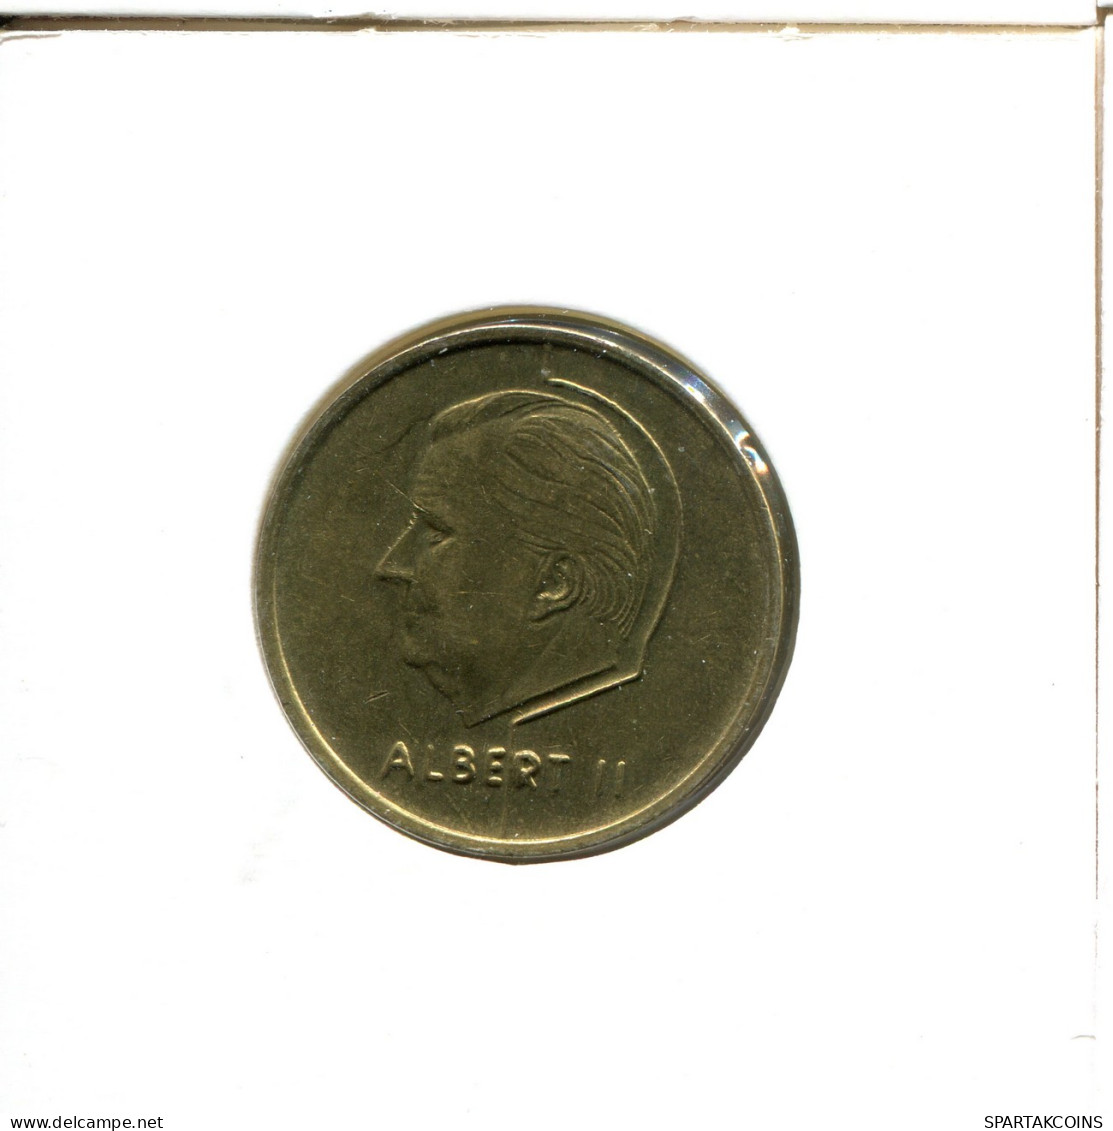 5 FRANCS 1994 BÉLGICA BELGIUM Moneda FRENCH Text #AX428.E - 5 Frank